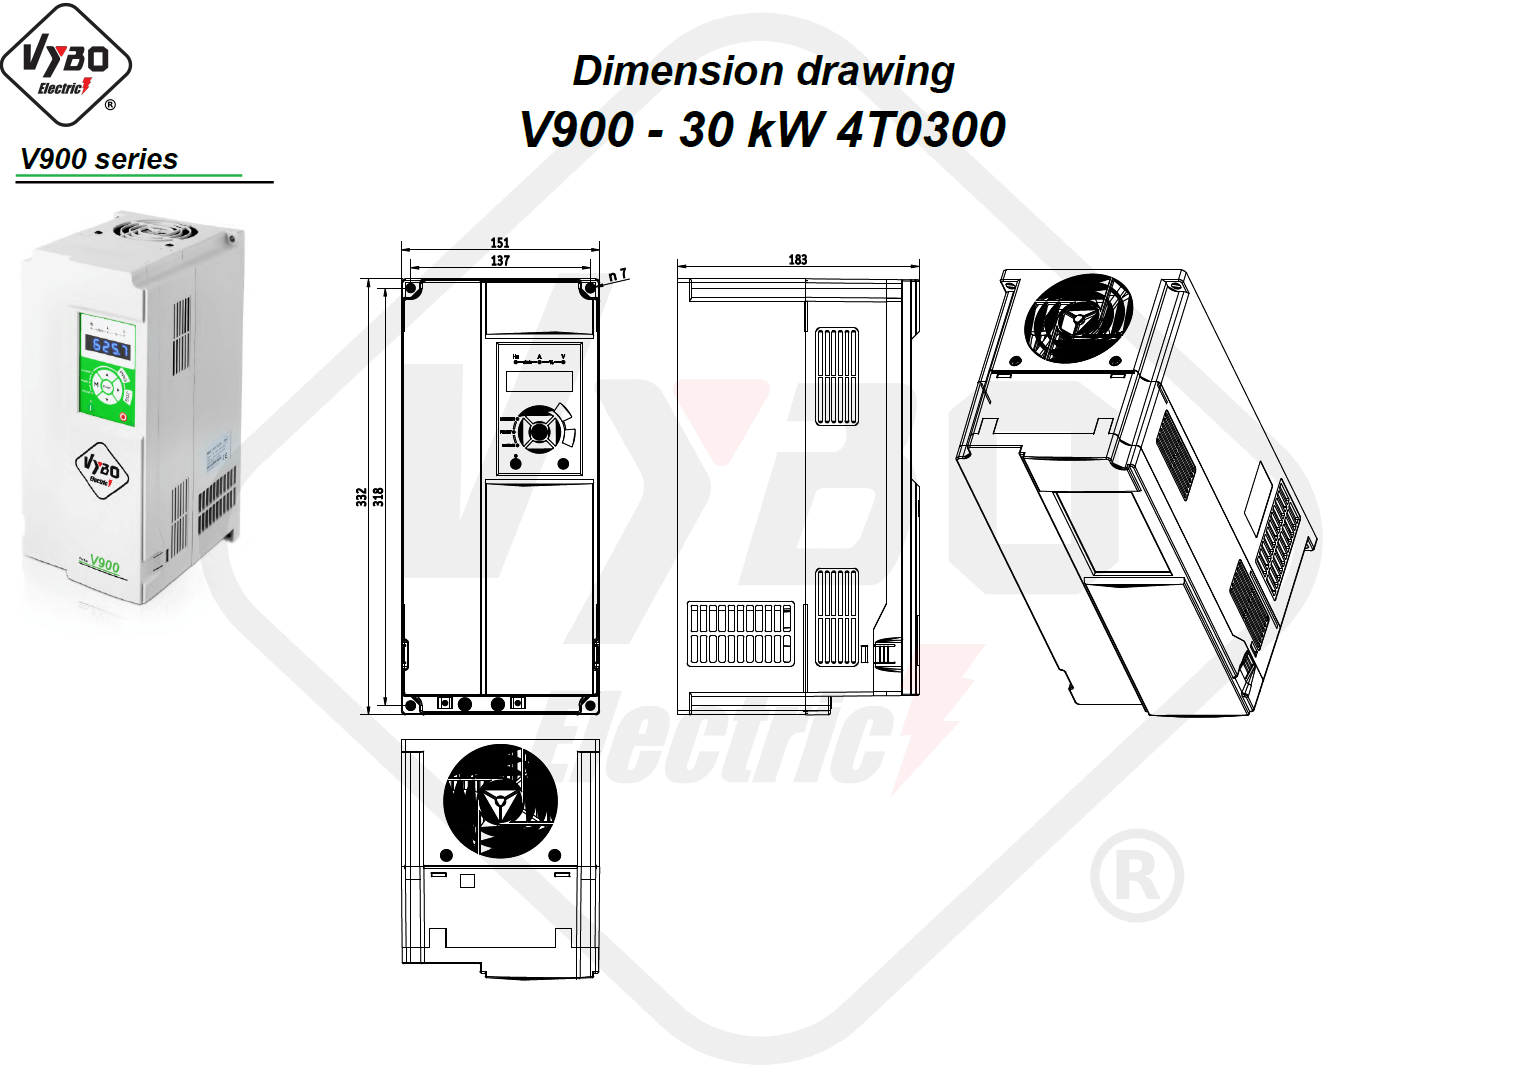 Dimensional drawing V900 4T0300